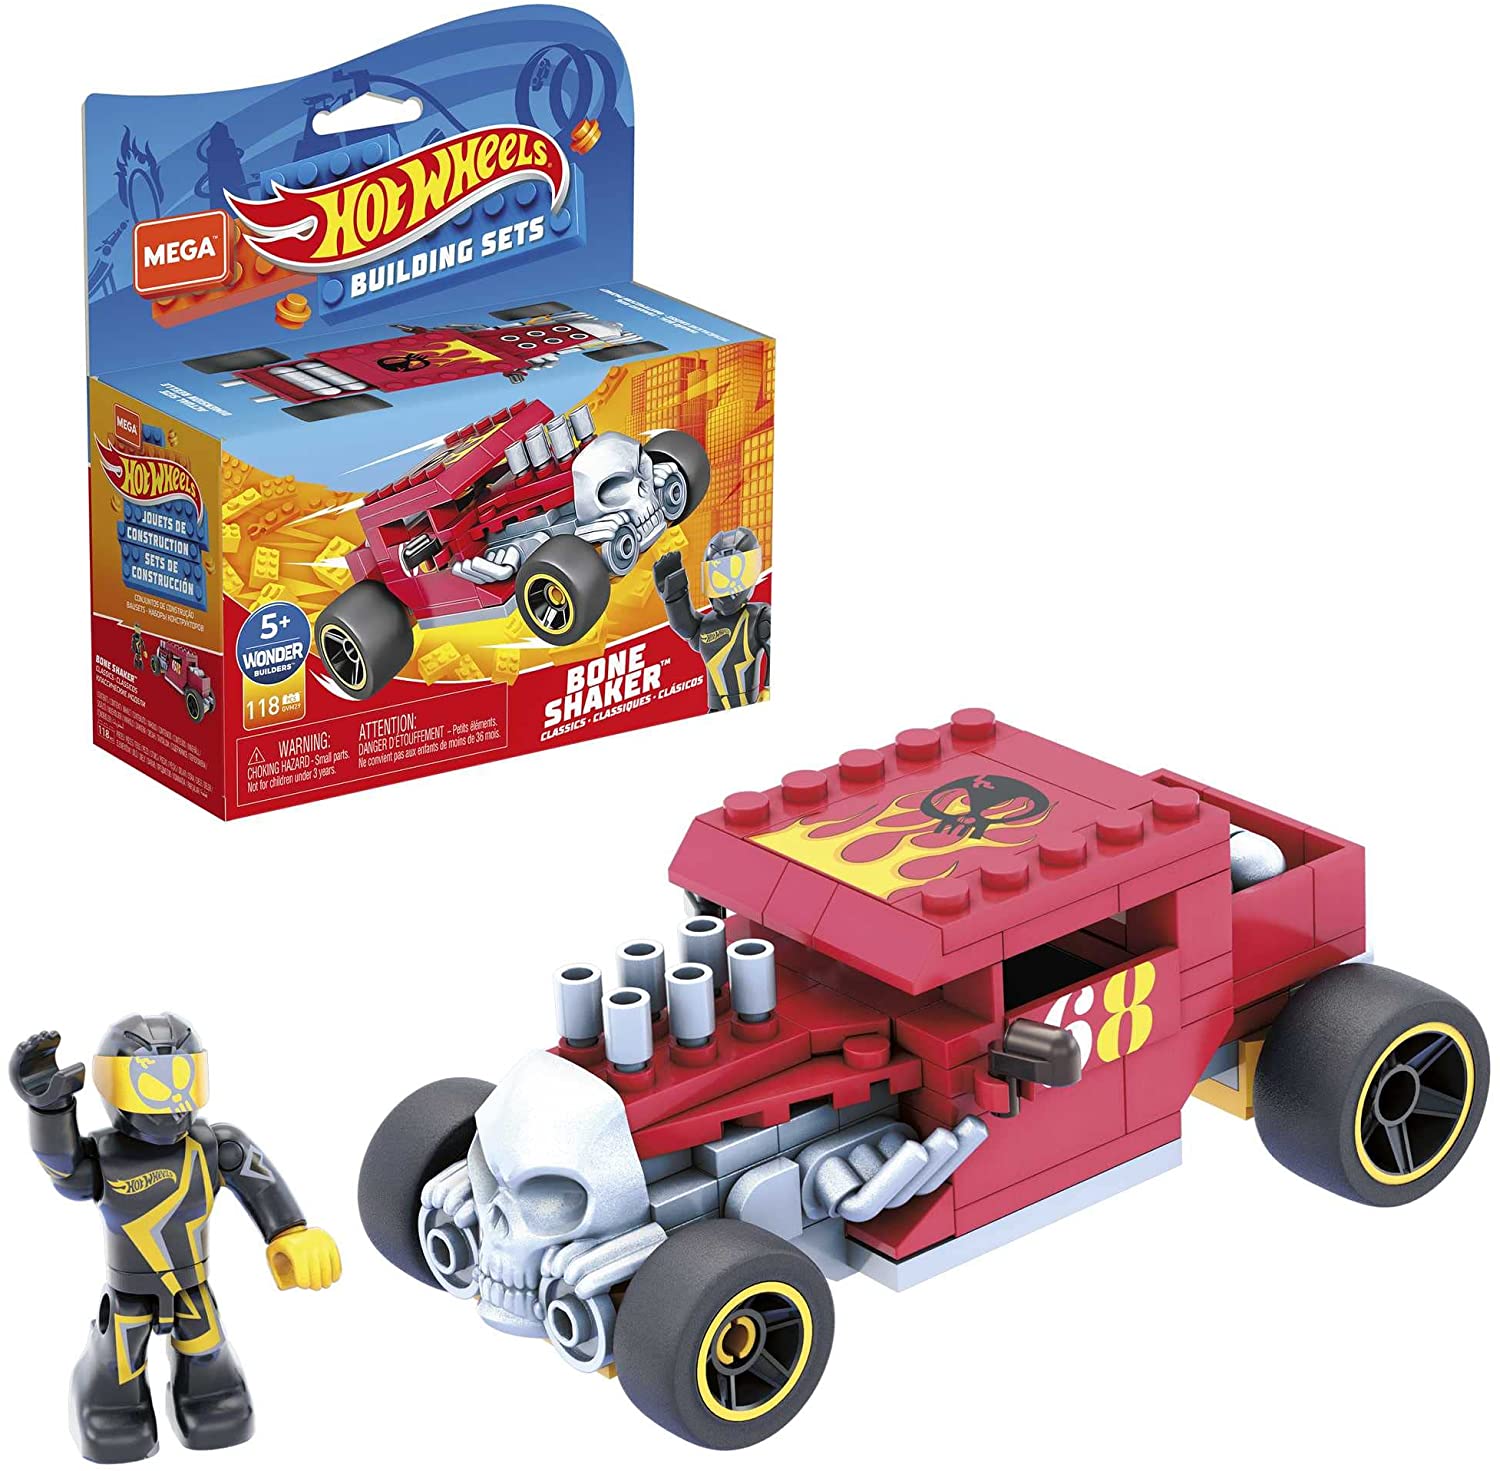 Hot Wheels Mega Construx Bone Shaker Construction Toy Set $6.54 + Free Shipping w/ Prime or on orders $25+